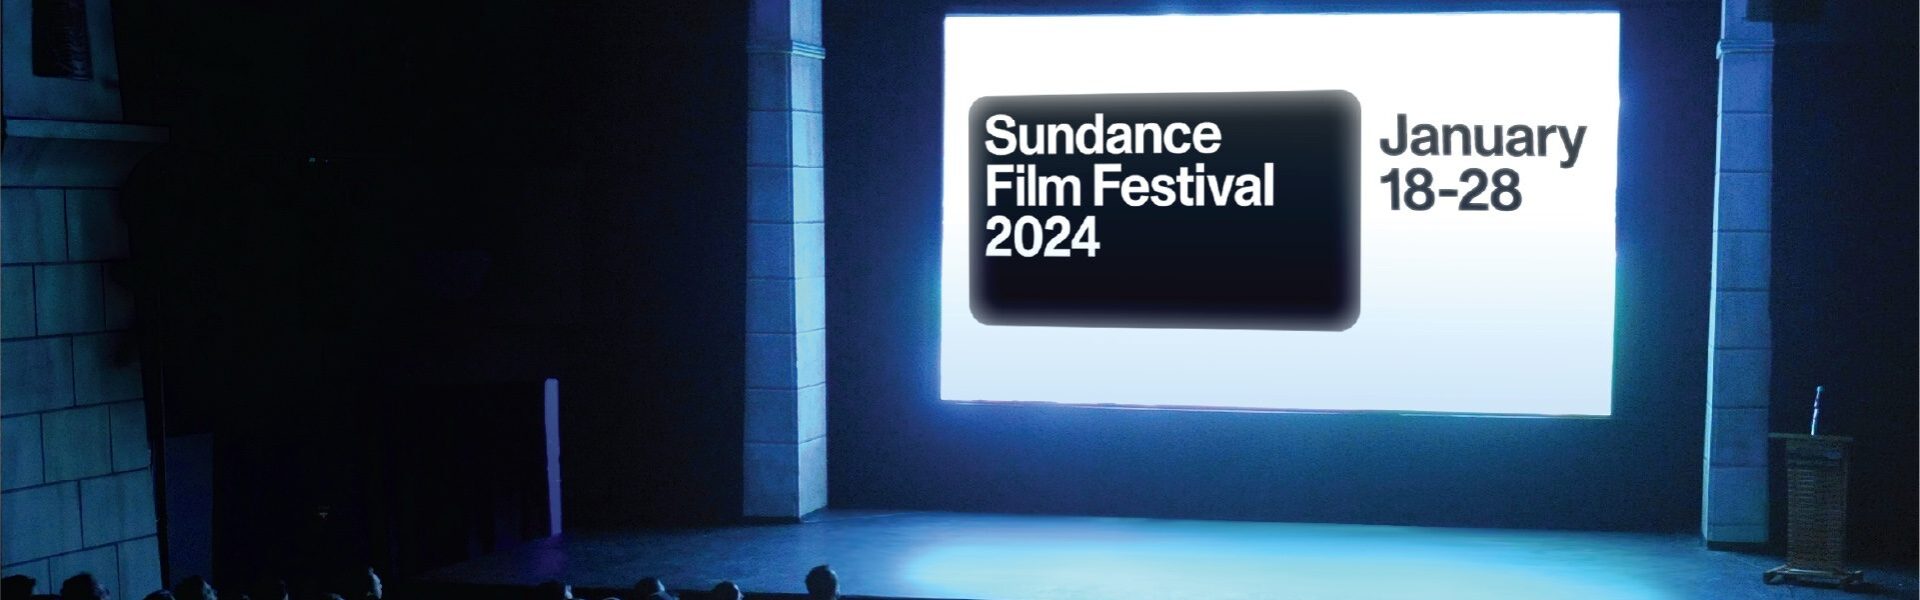 visit films announces sundance film festival slate moviescope